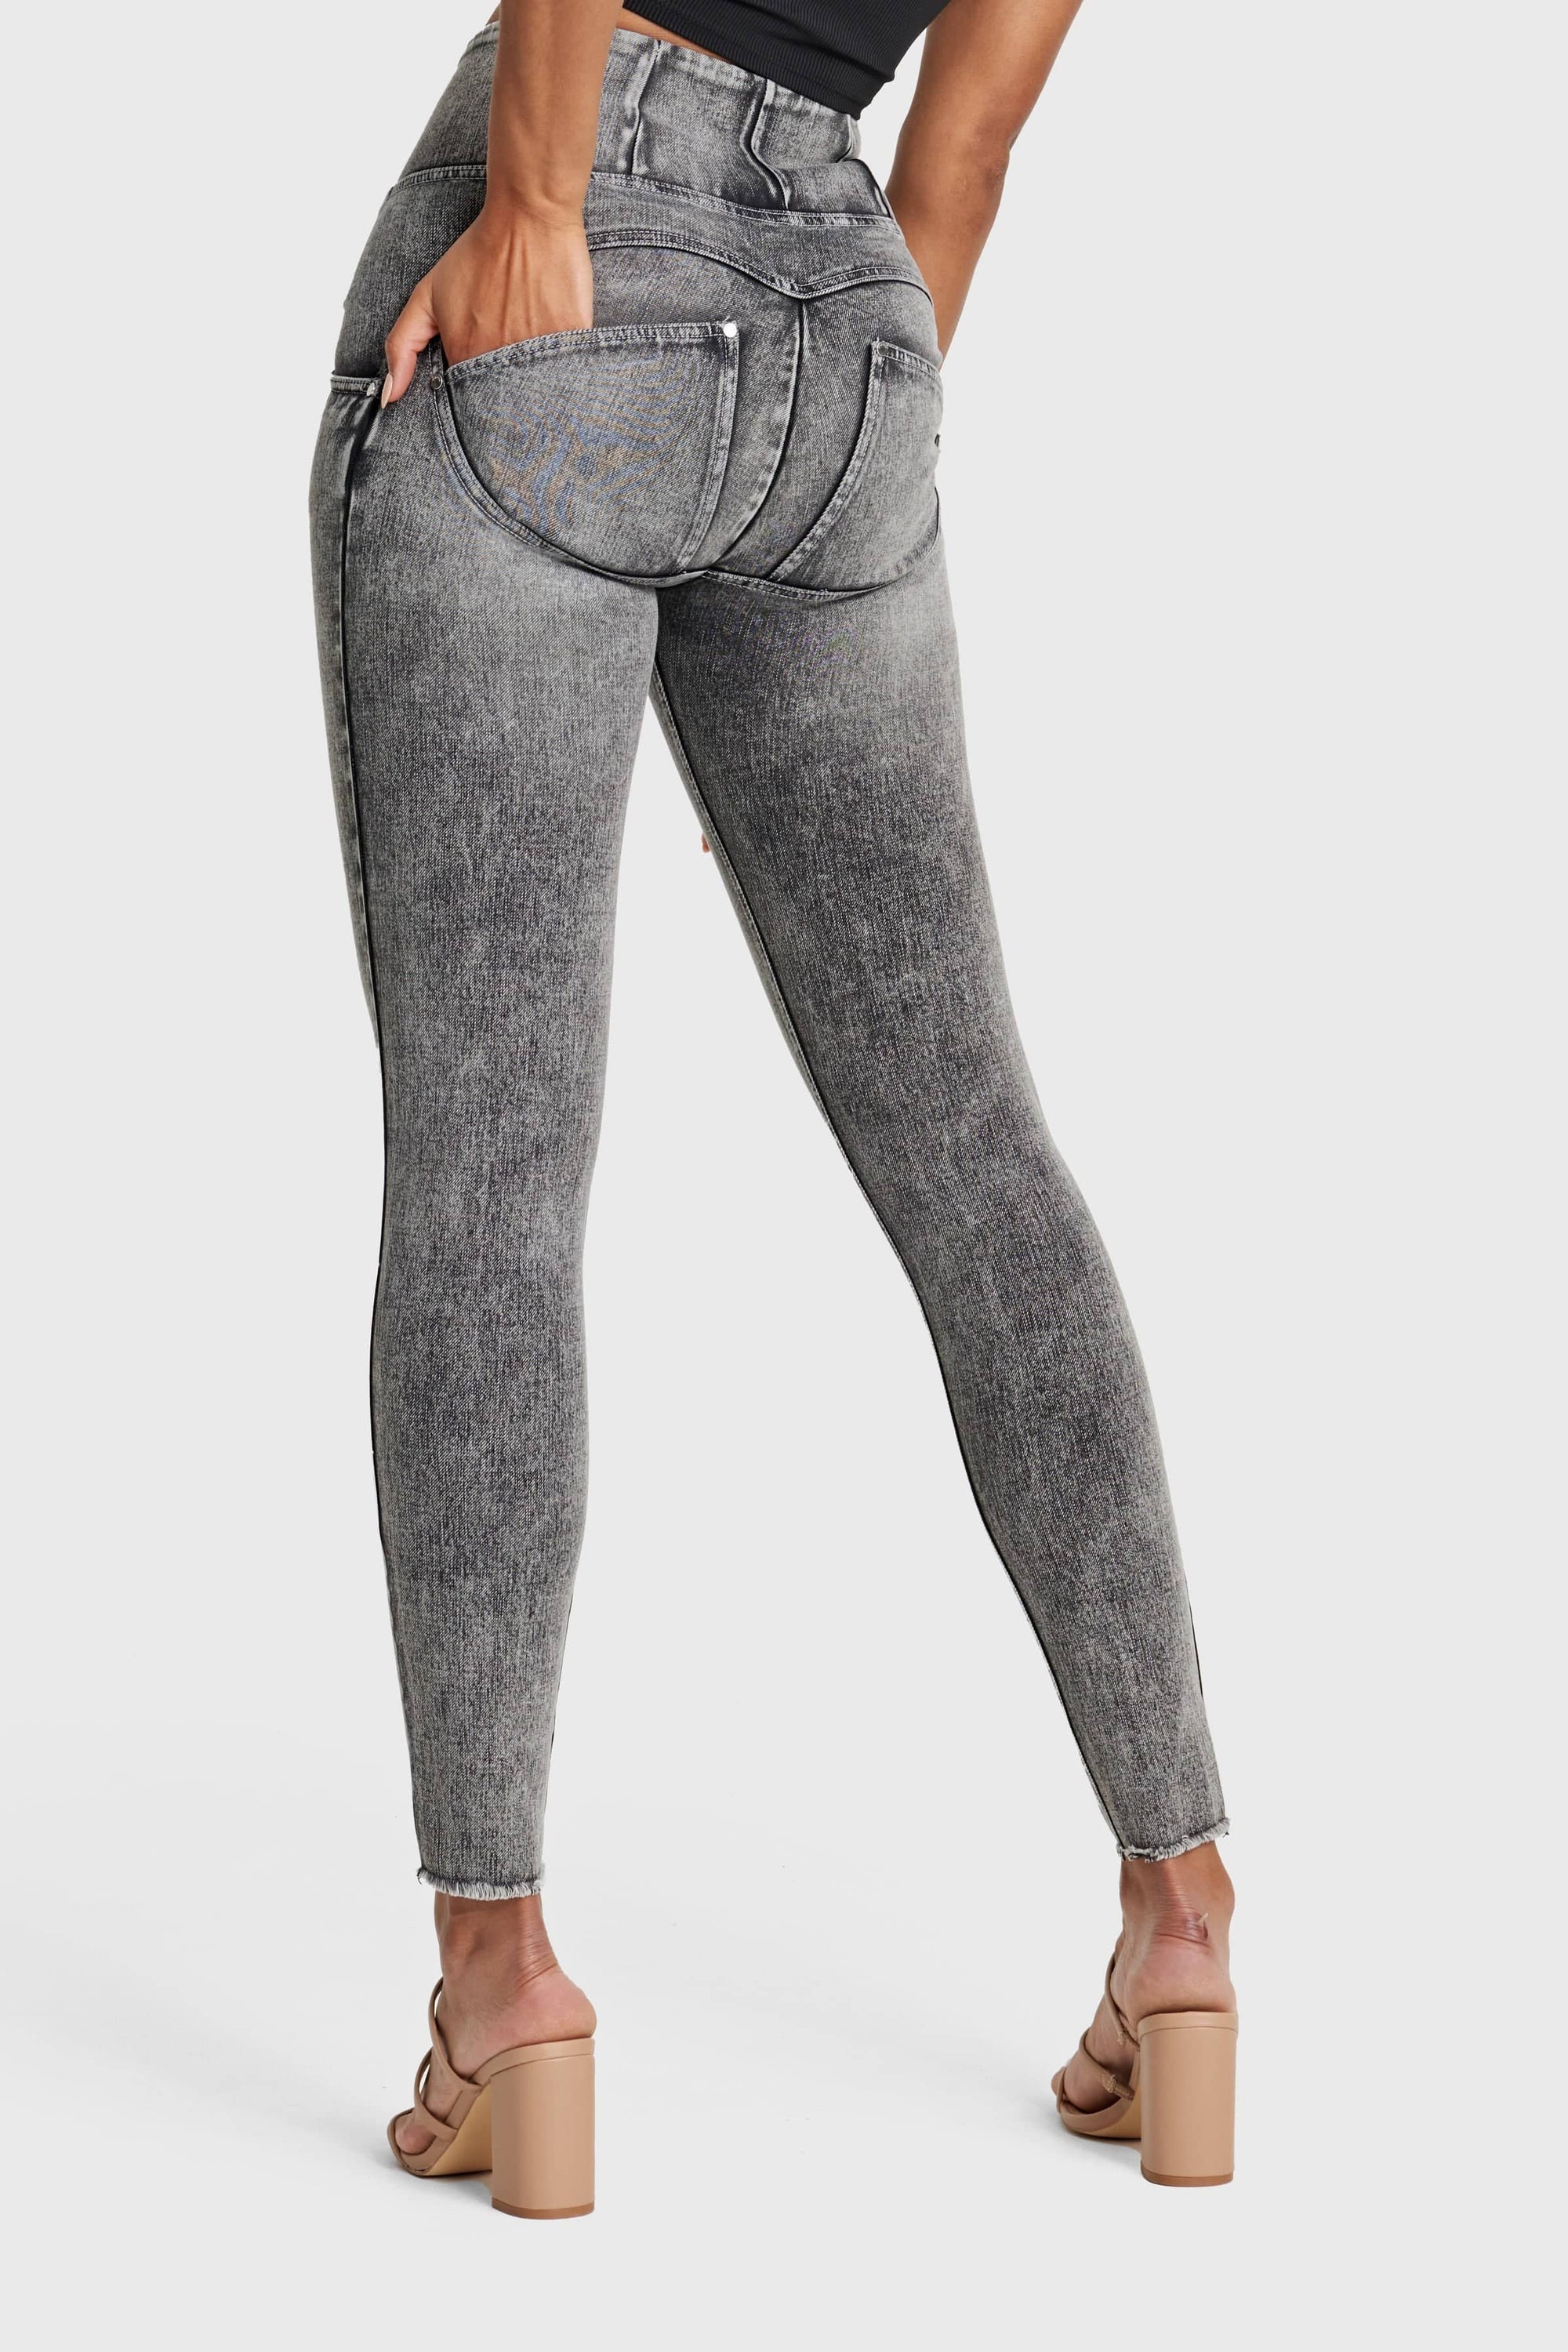 WR.UP® Snug Ripped Jeans - High Waisted - Full Length - Grey Stonewash + Grey Stitching 7